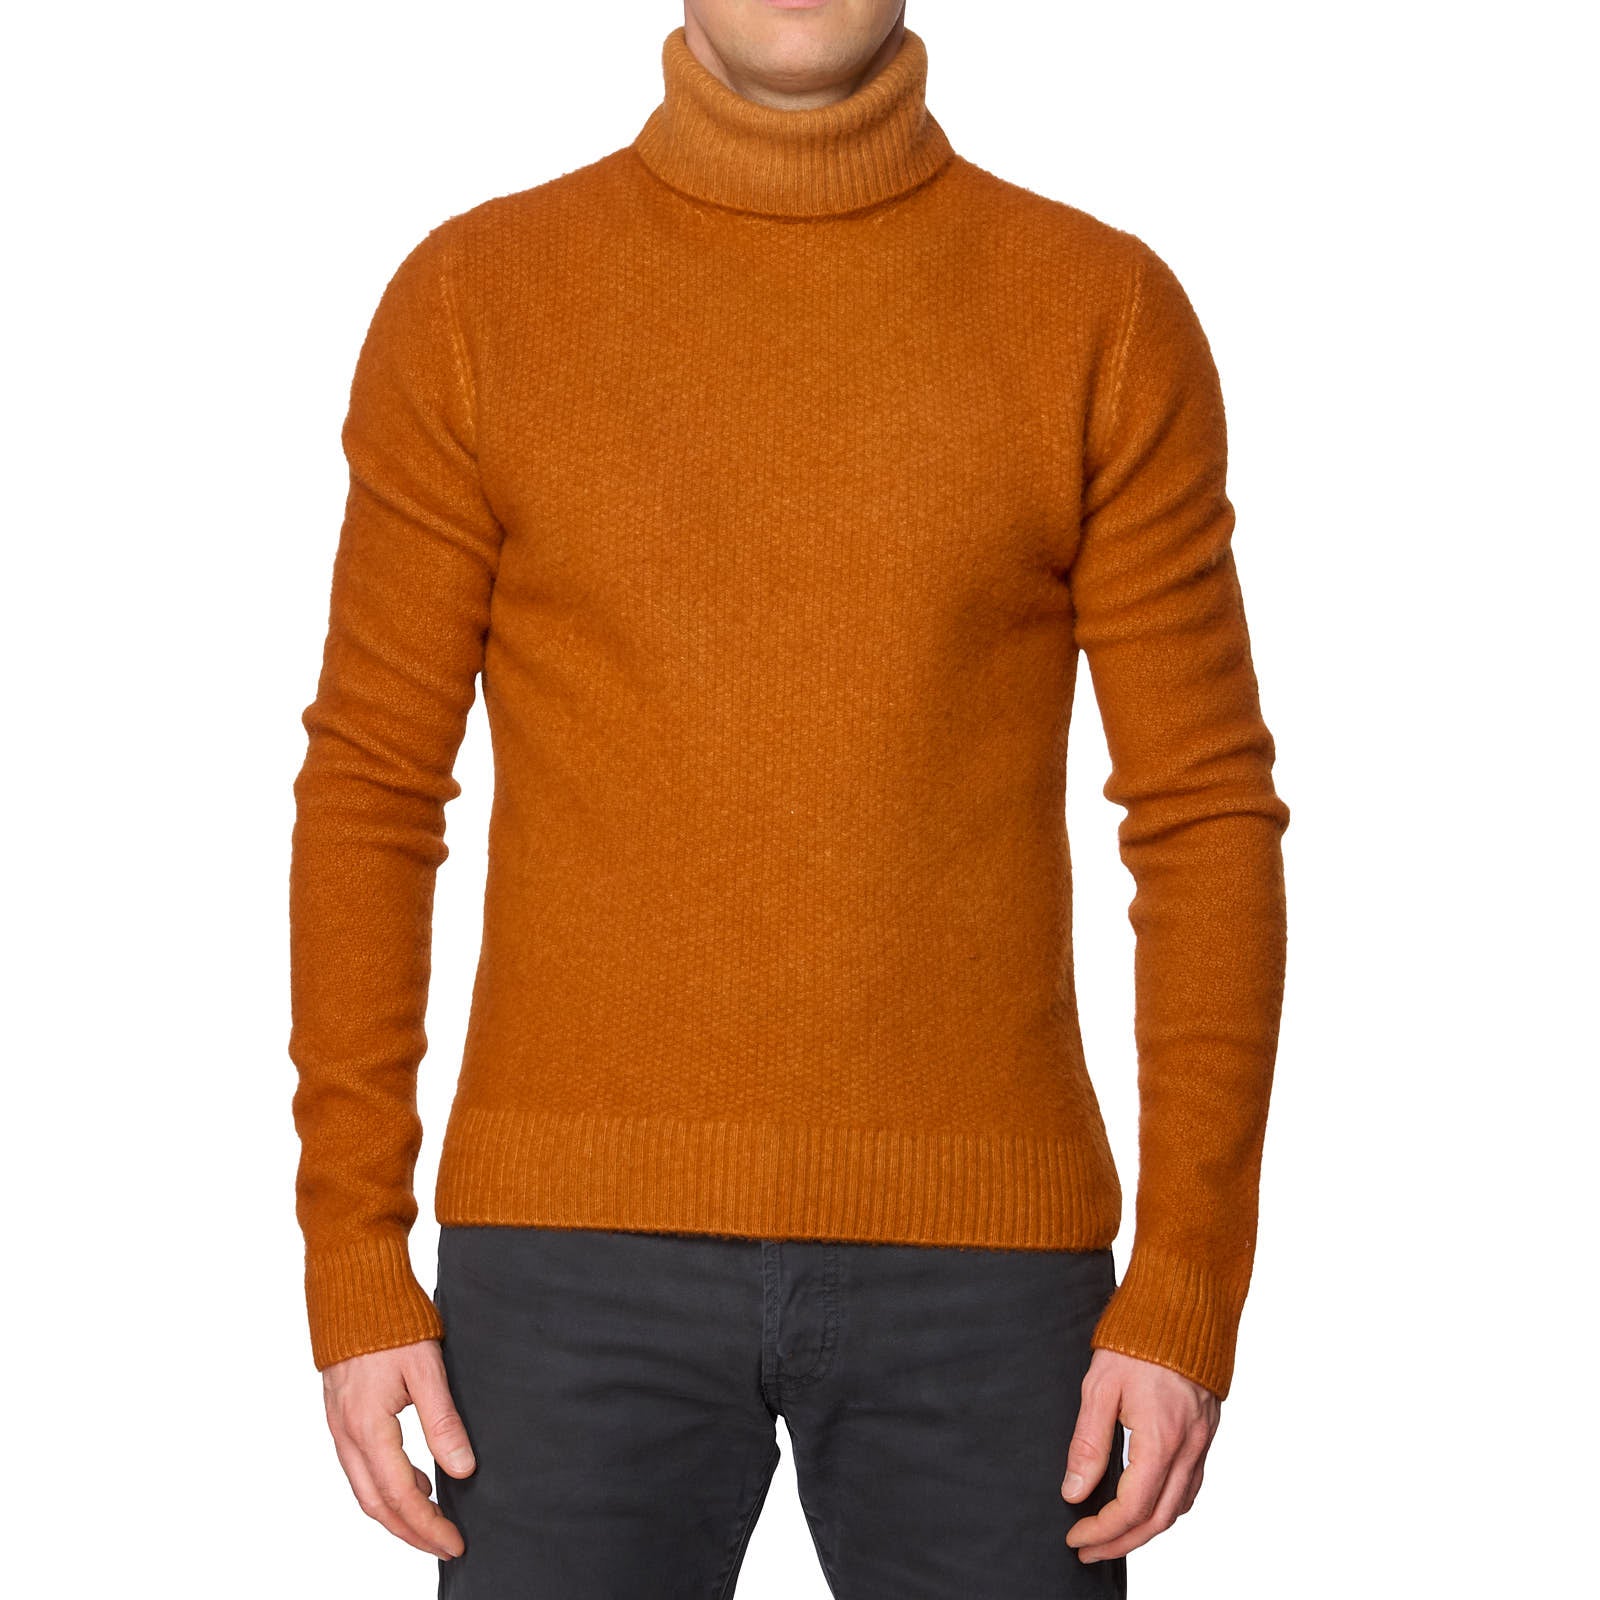 BORGONERO Virgin Wool-Cashmere Knit Turtleneck Sweater NEW Slim